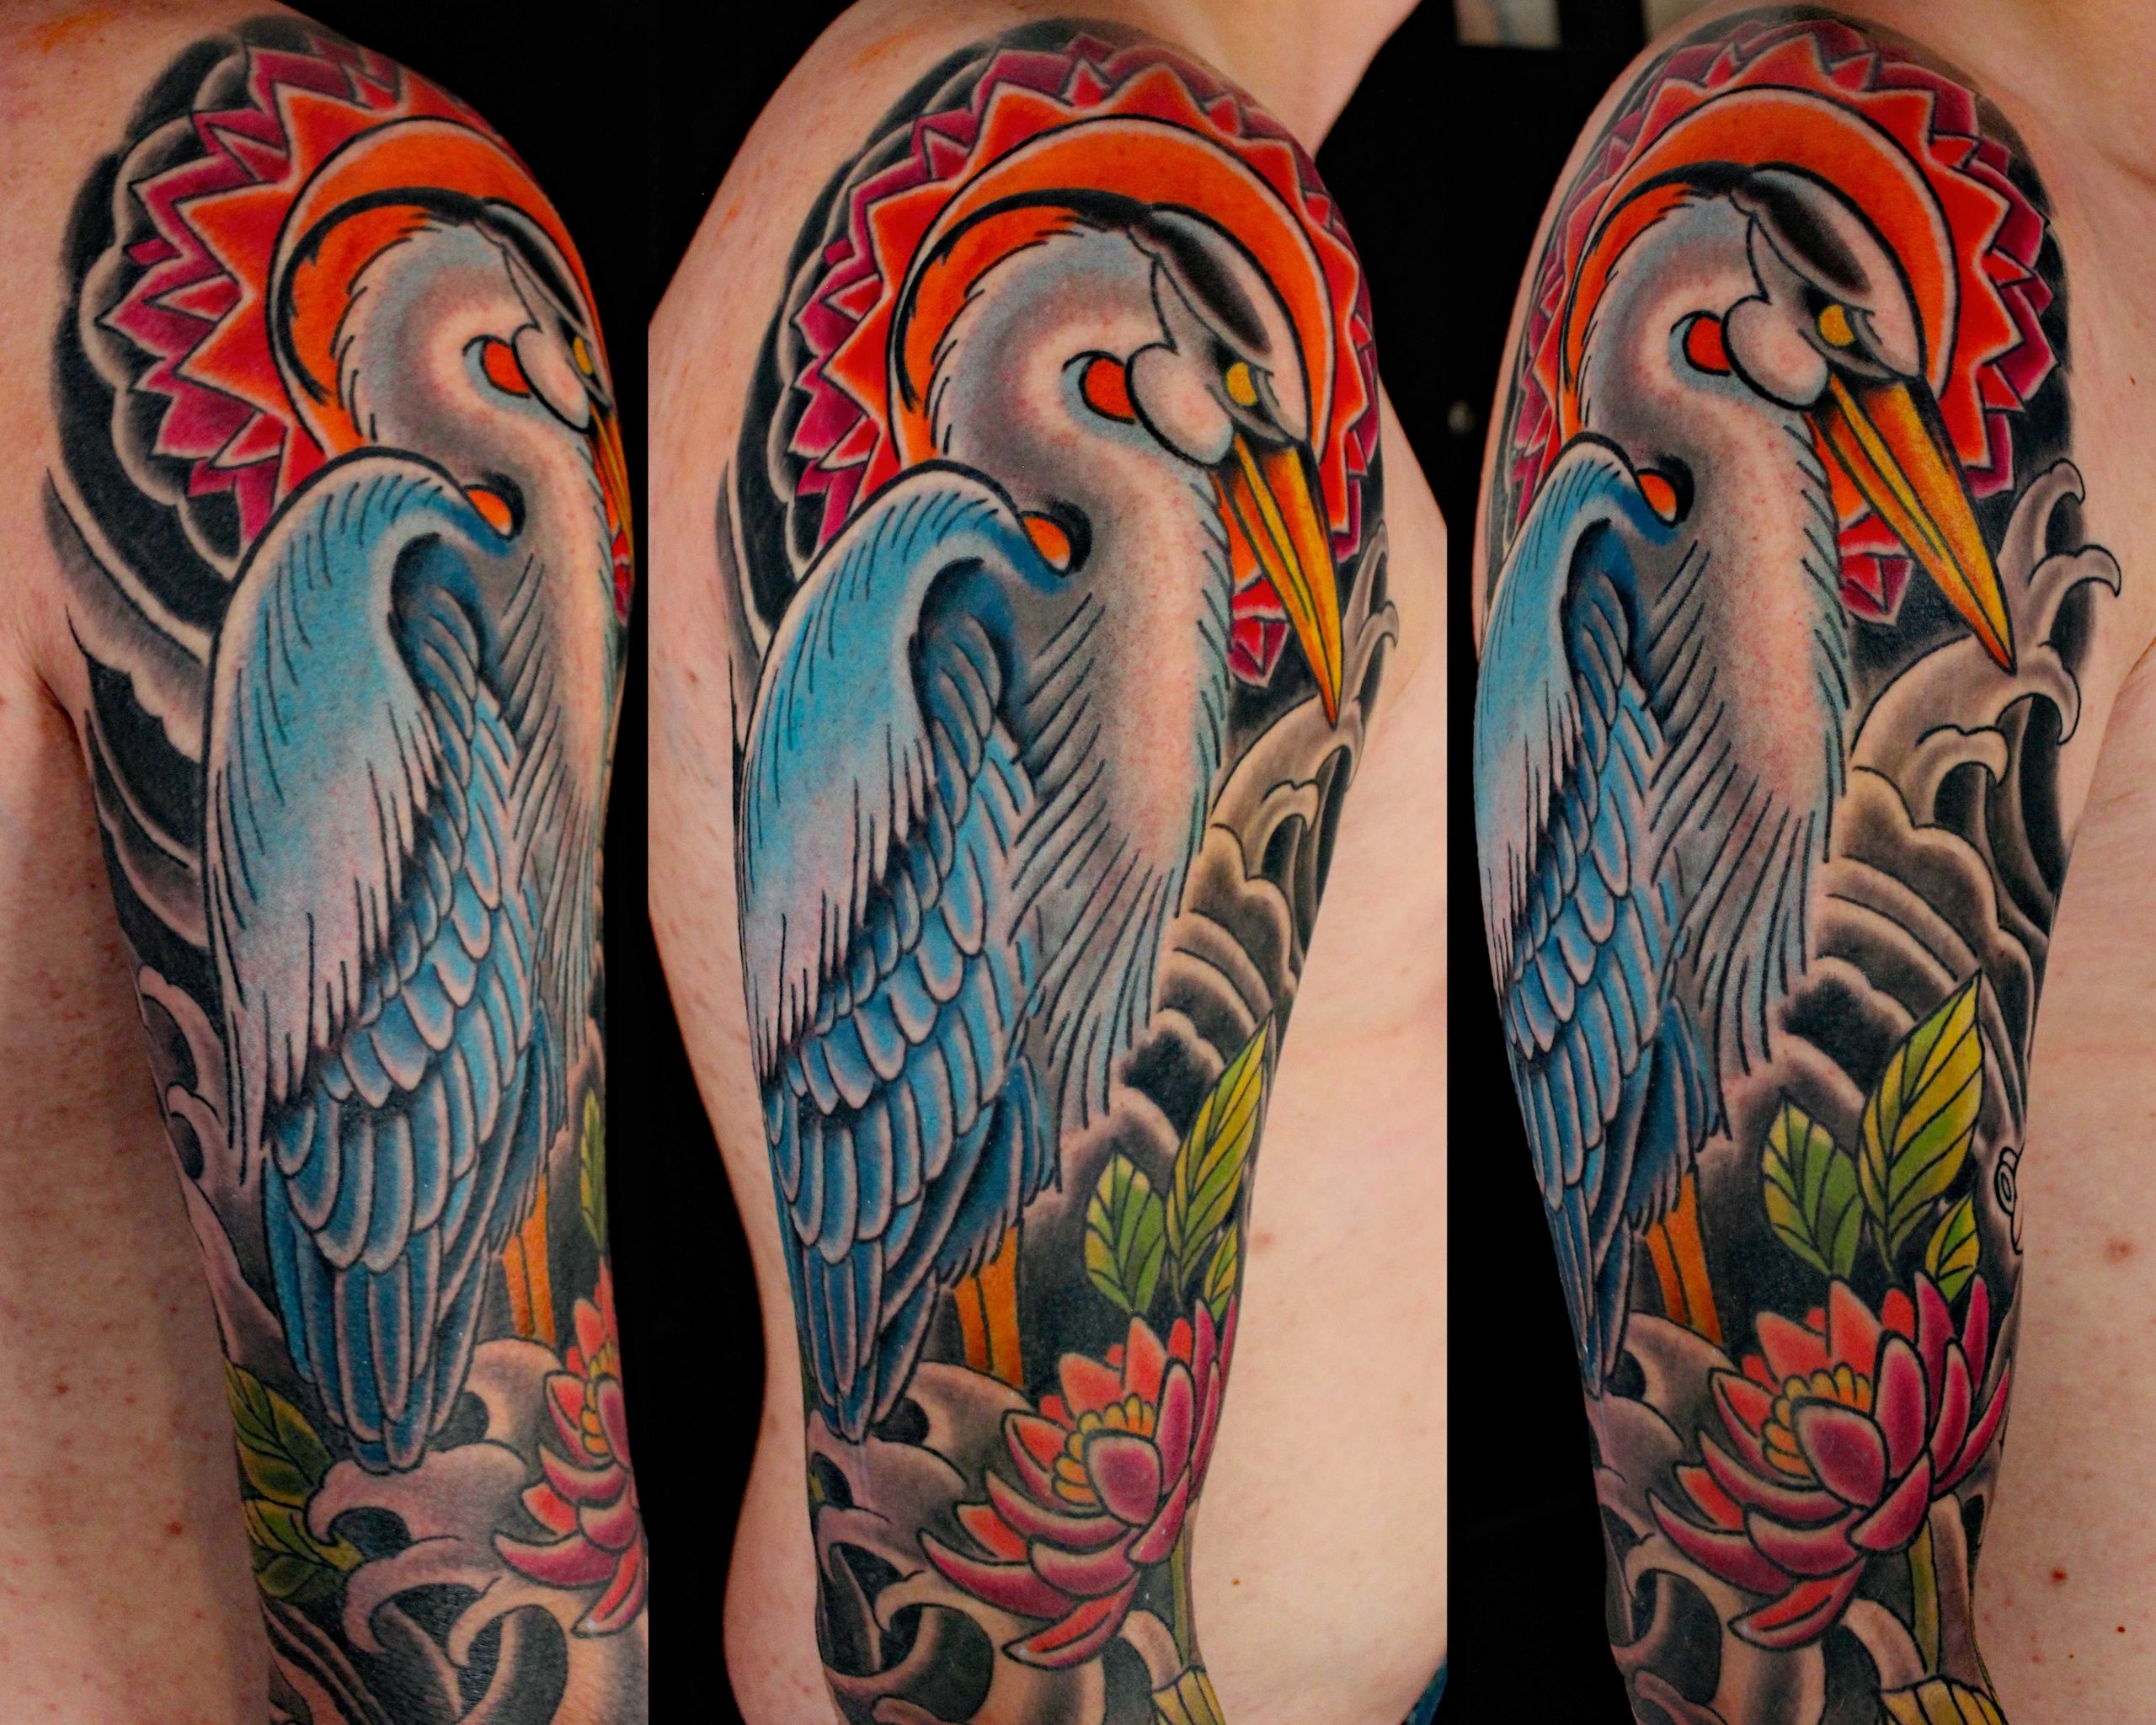 948 Heron Tattoo Images Stock Photos  Vectors  Shutterstock